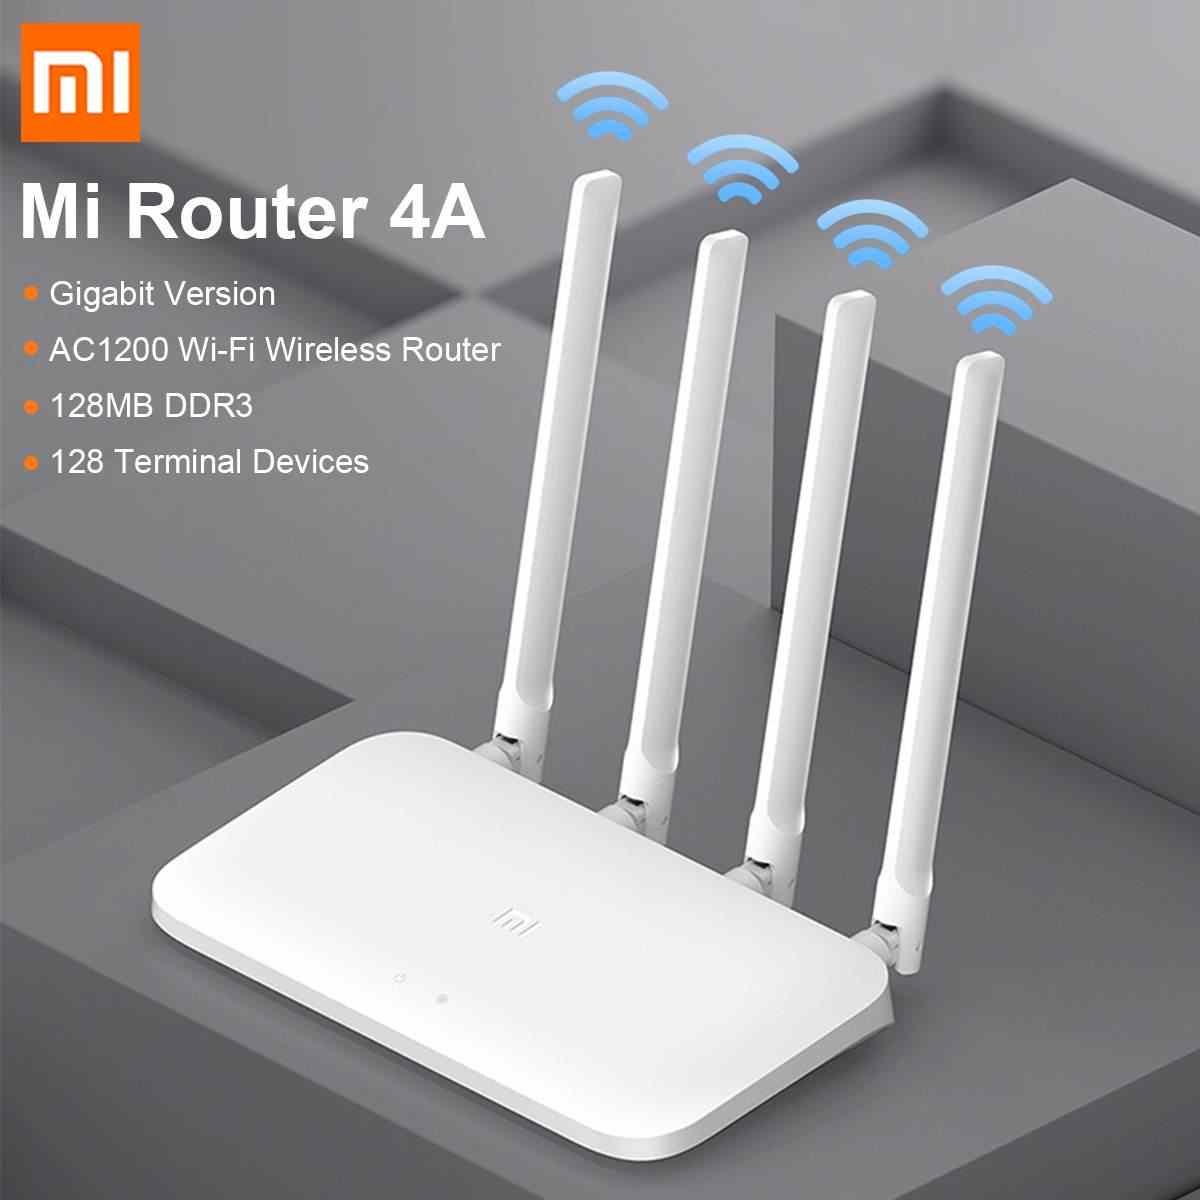 Wifi router 4a gigabit edition